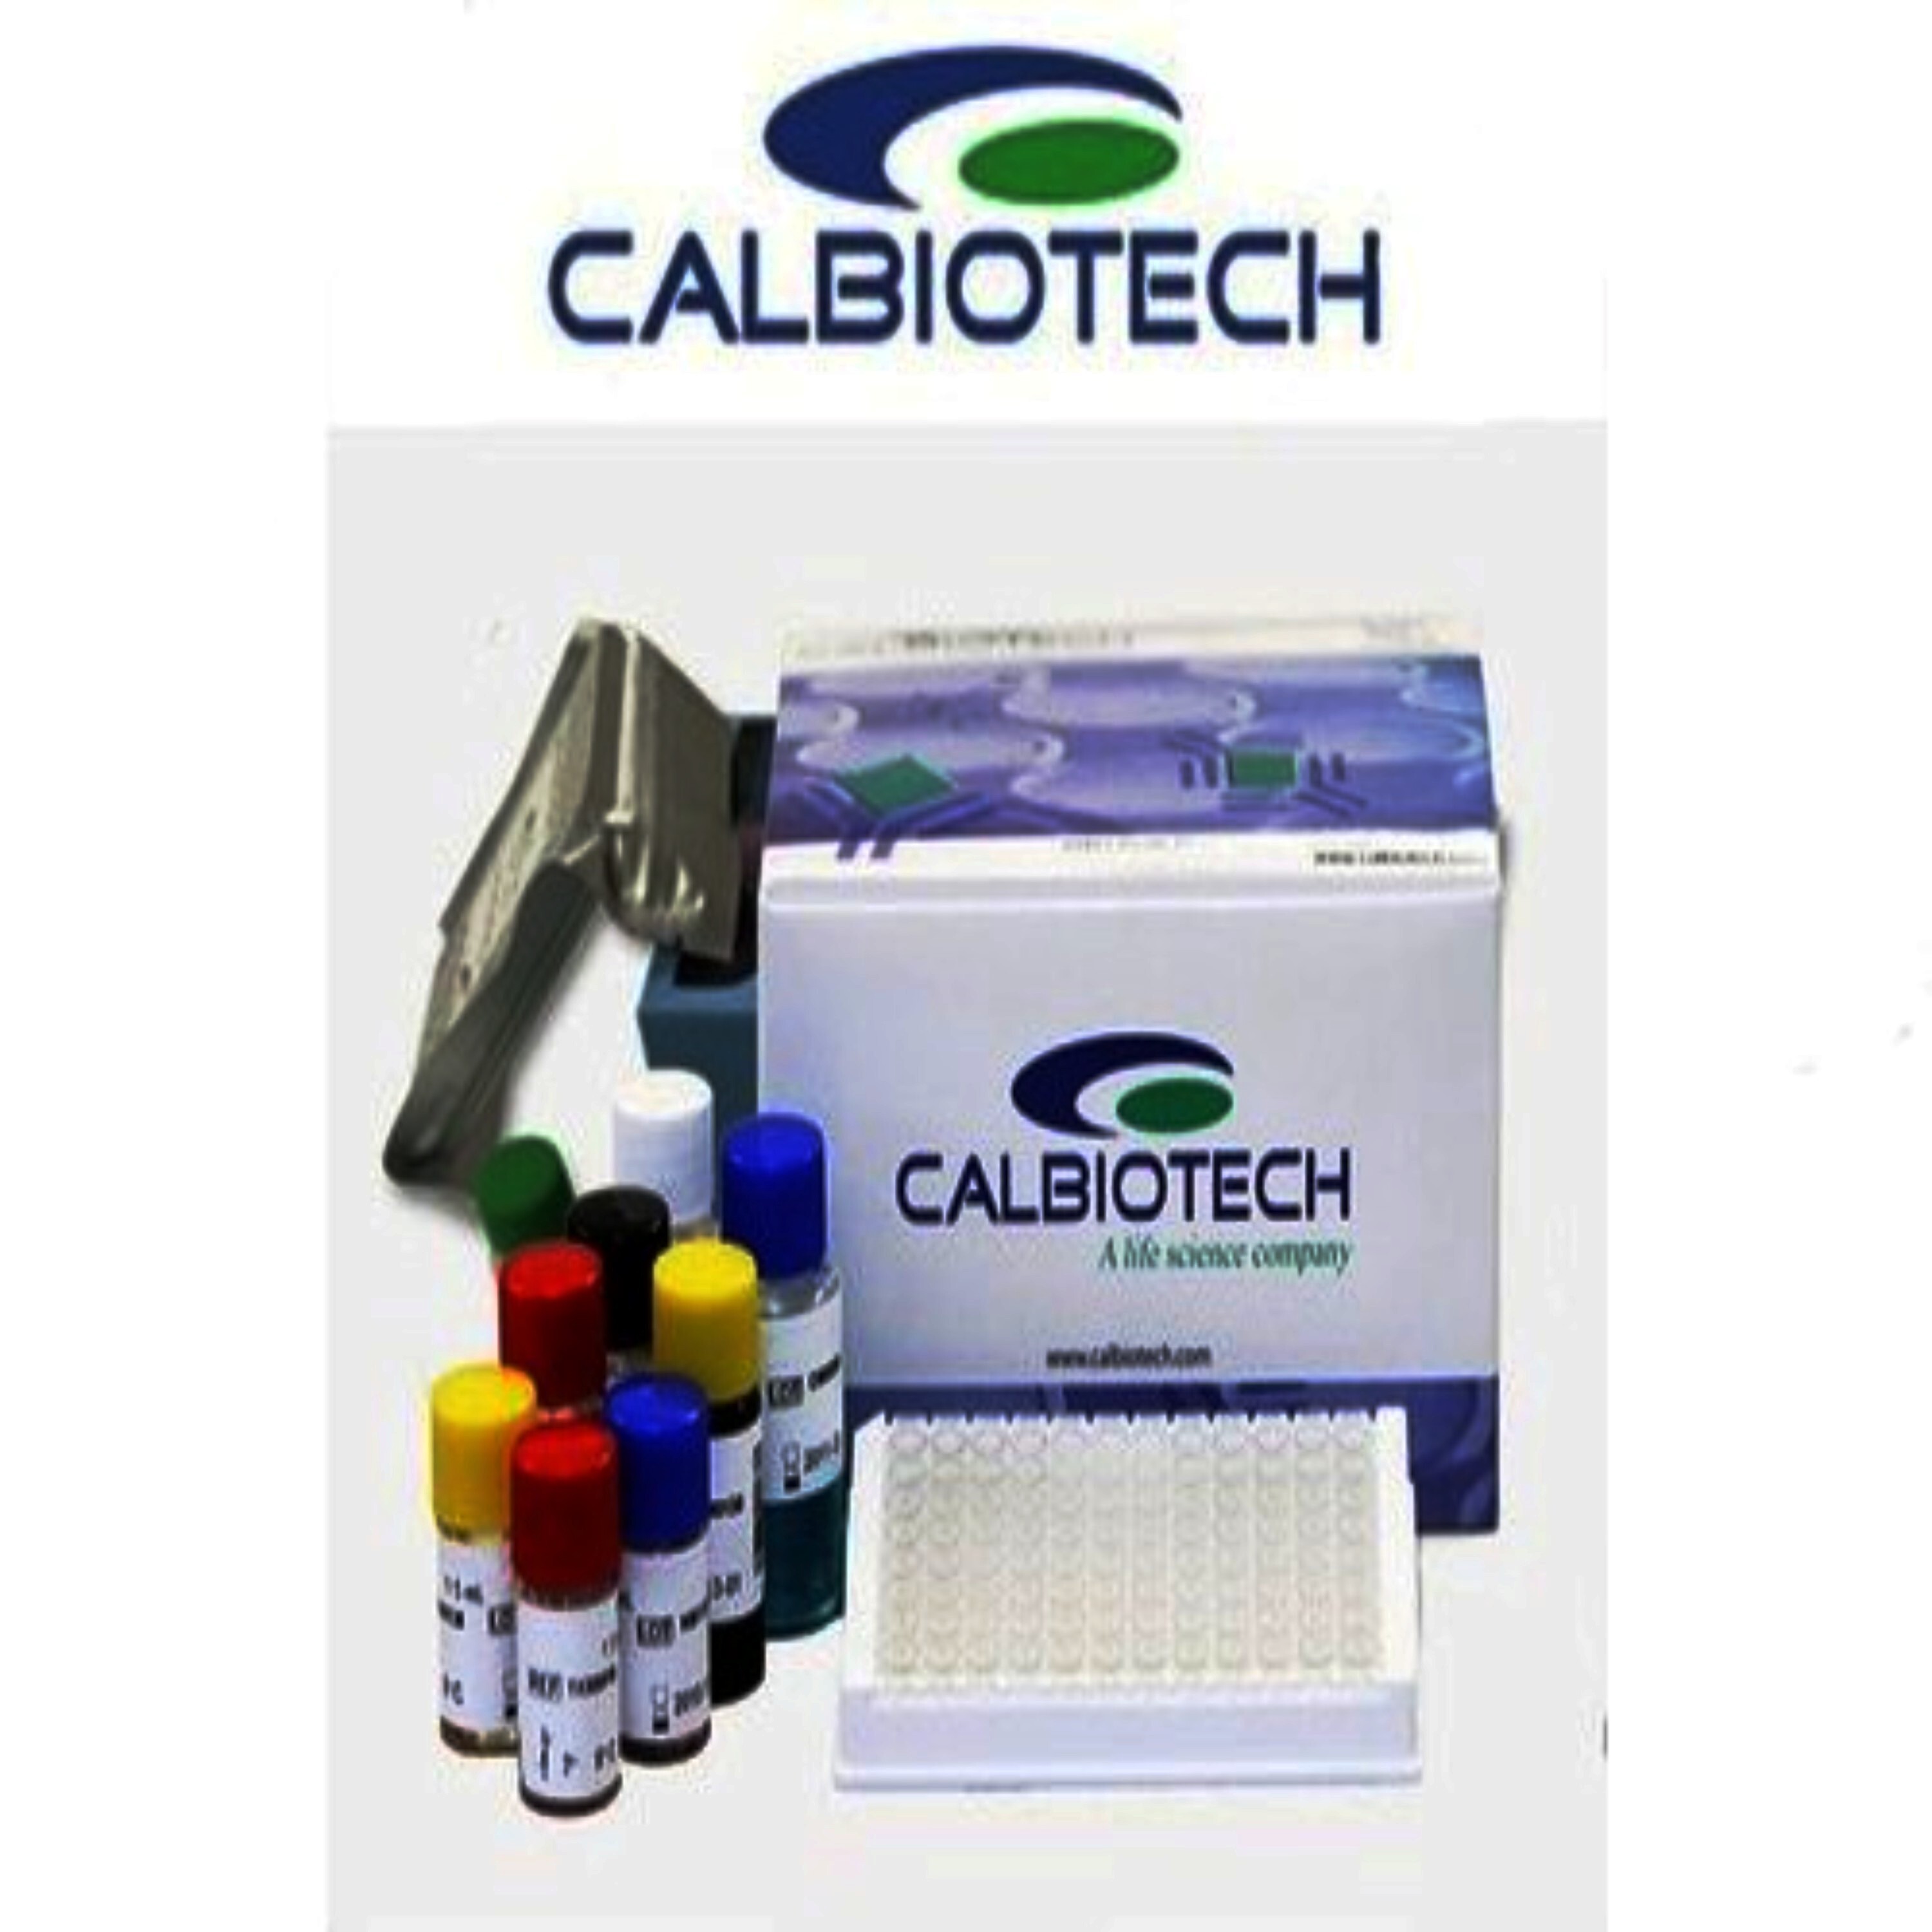 Calbiotech Cortisol Elisa Kit (Saliva)